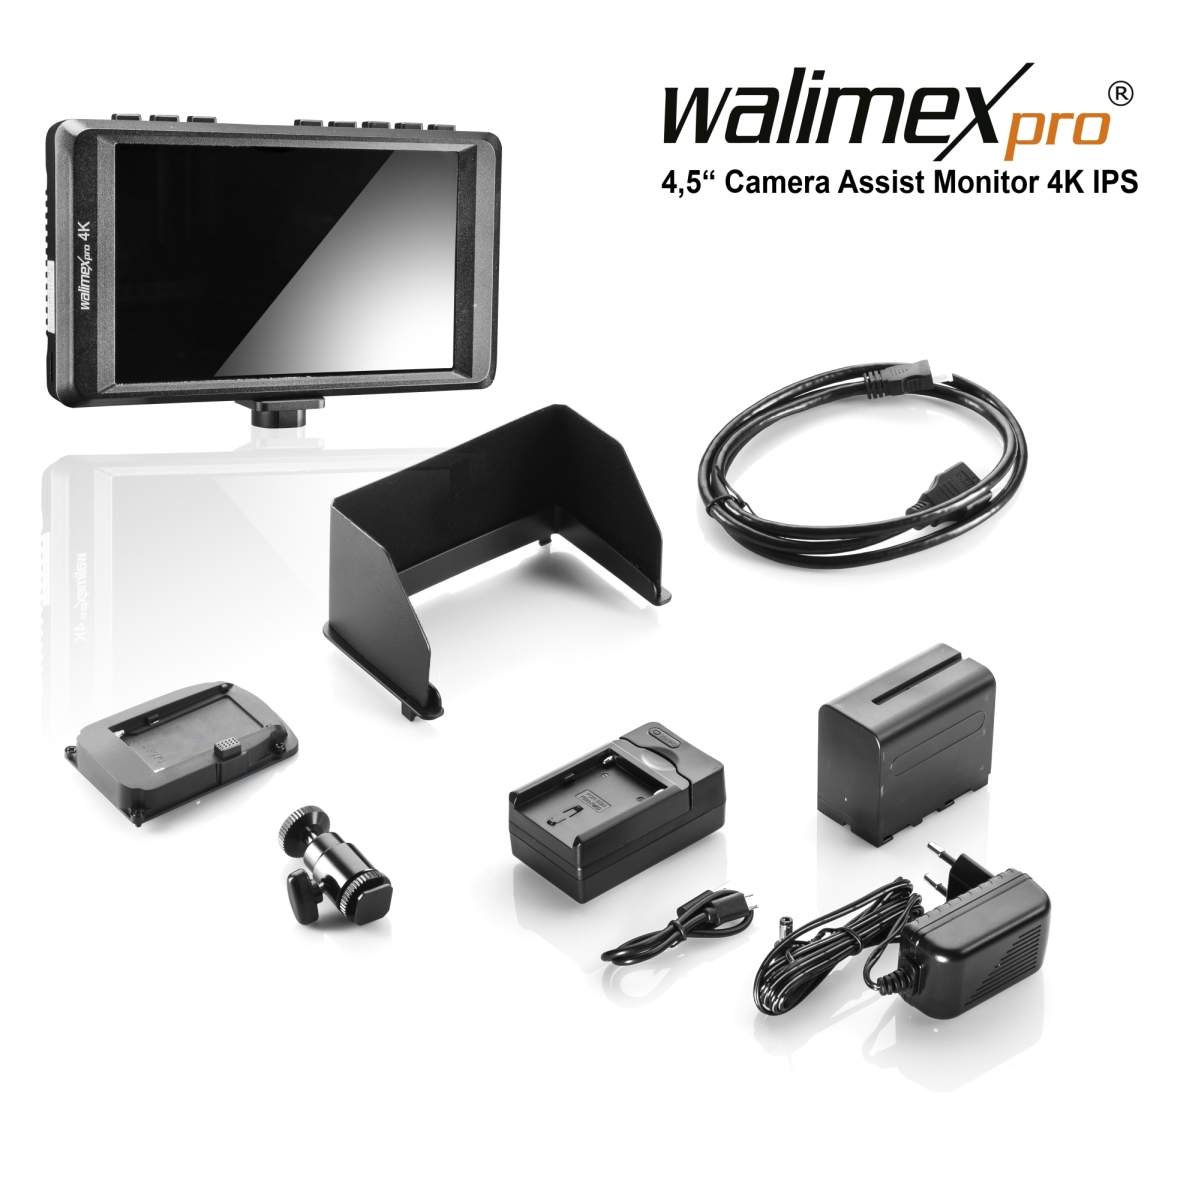 Walimex pro 4,5' Camera Assist Monitor 4K IPS Set